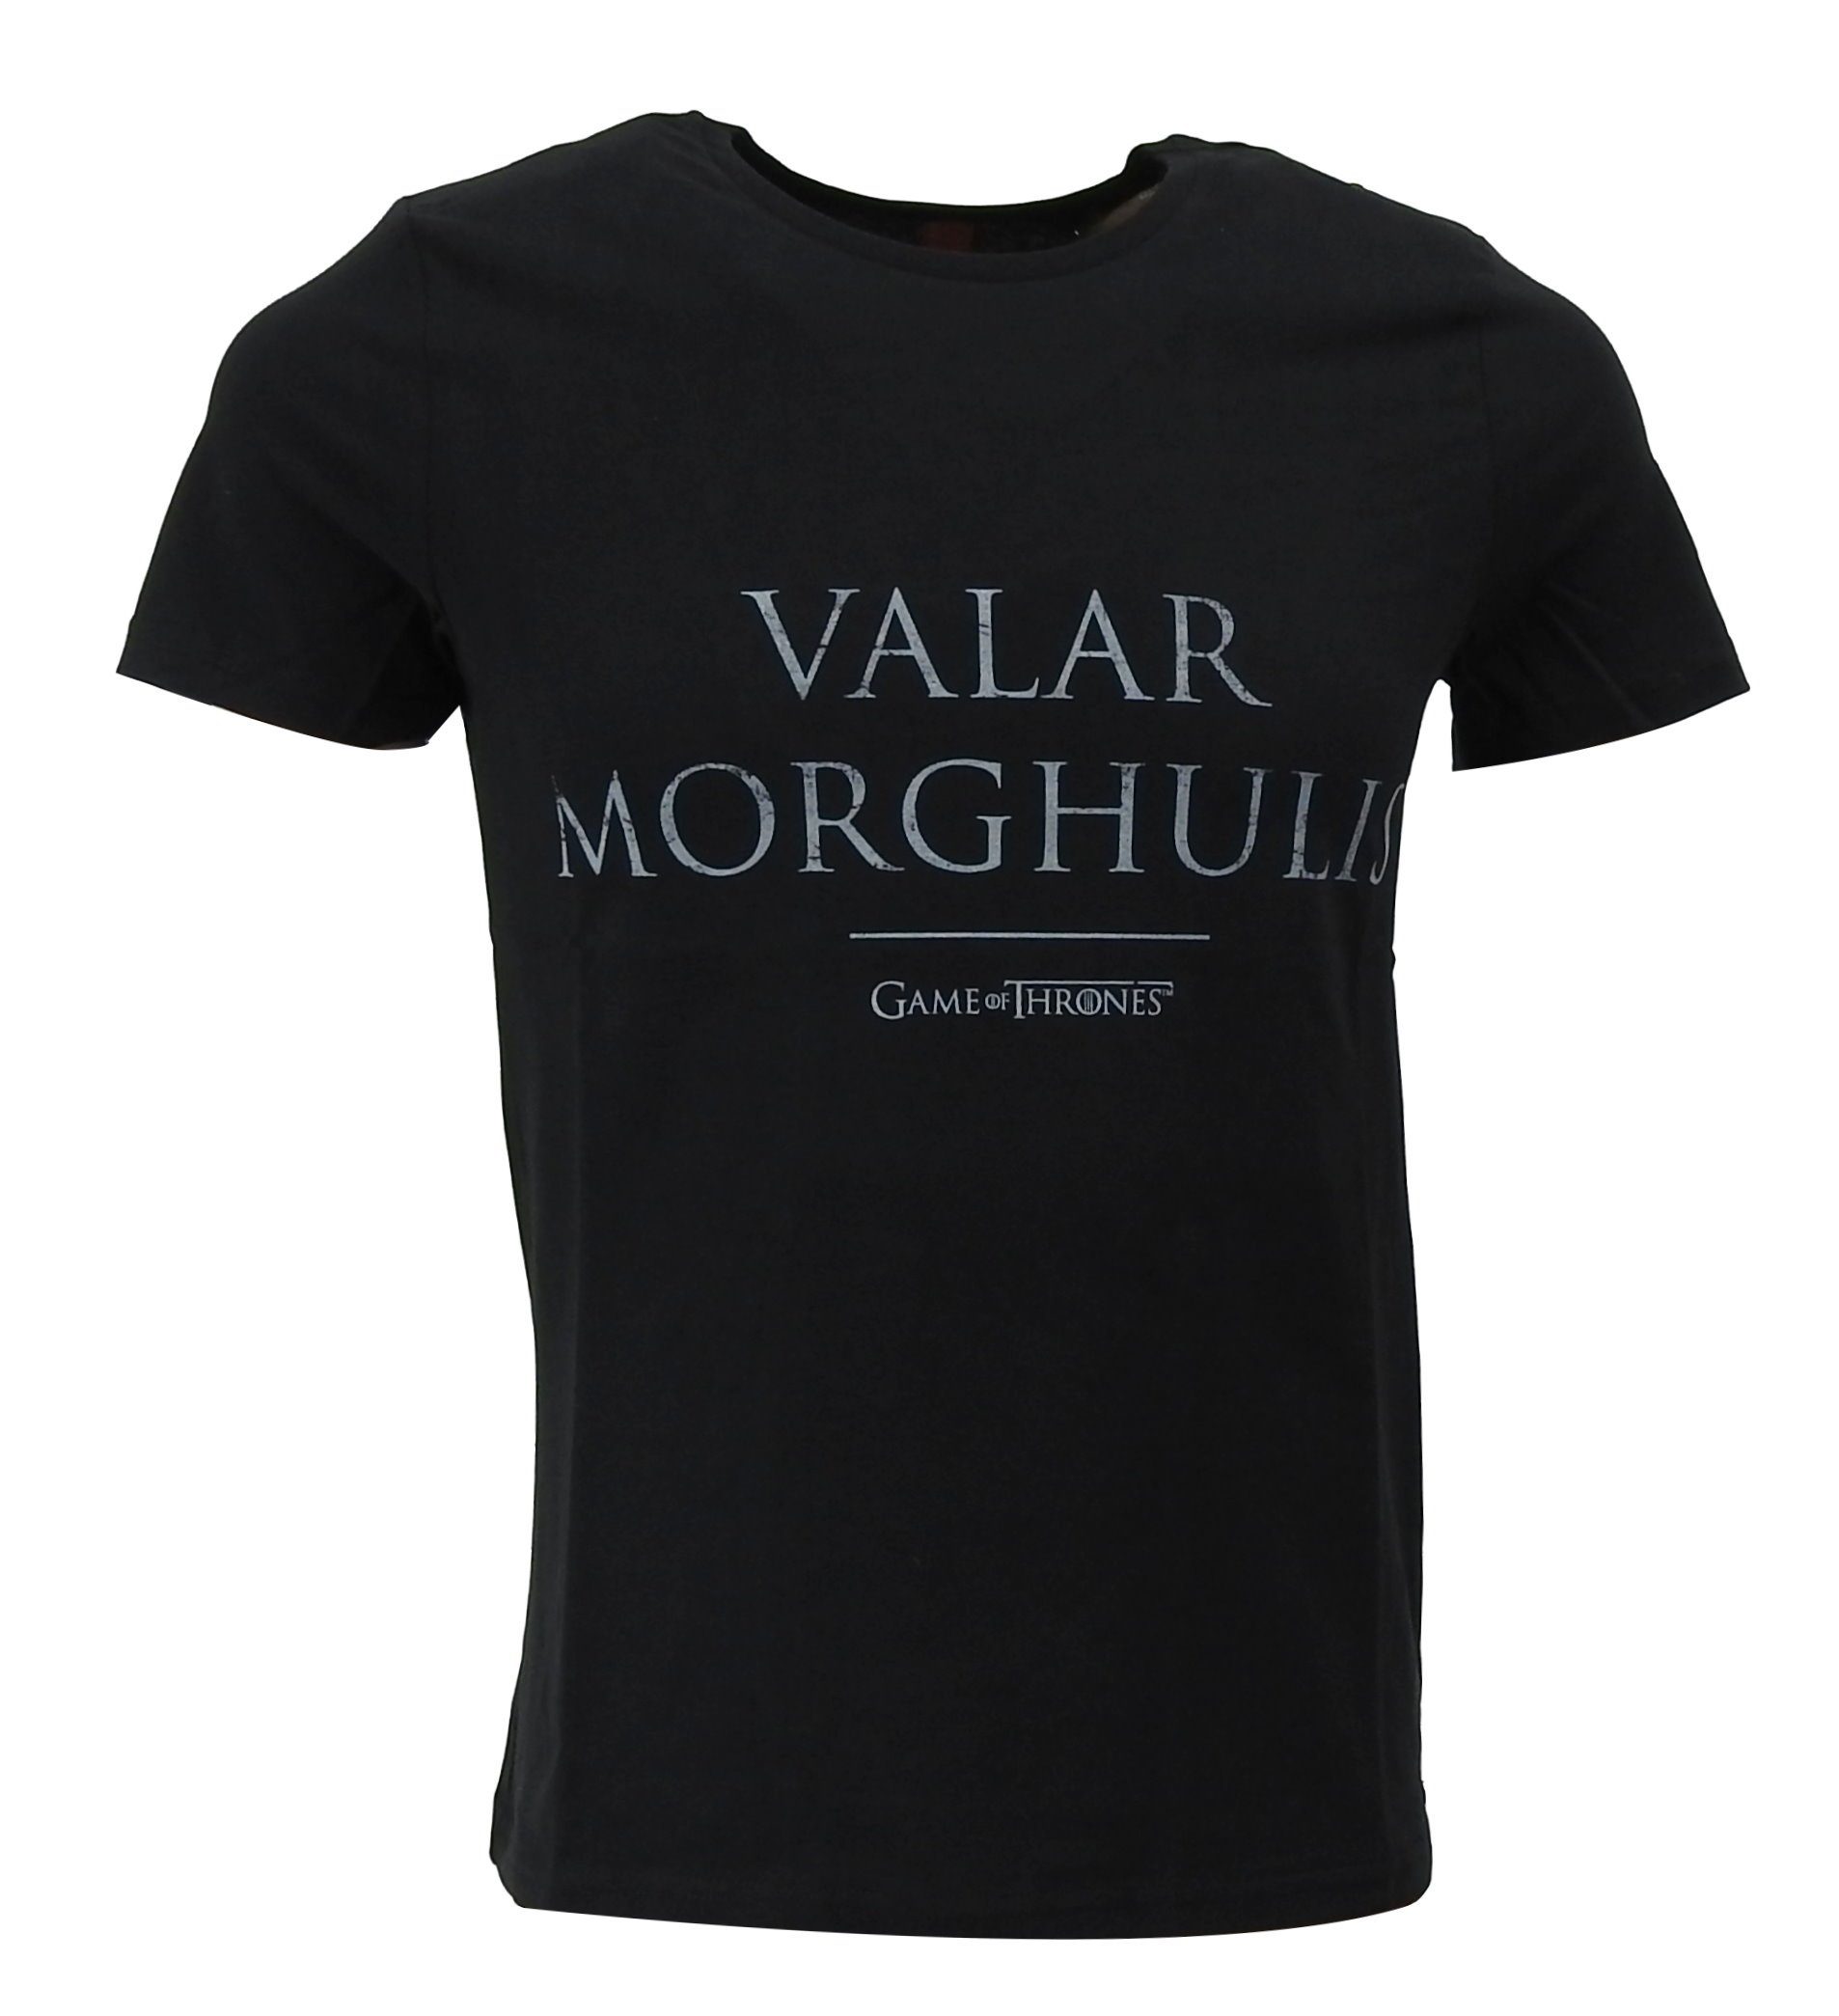 Herren Shirt Morghulis Gozoo Valar Freizeit Game of TShirt T-SHIRT schwarz Thrones T-Shirt Men